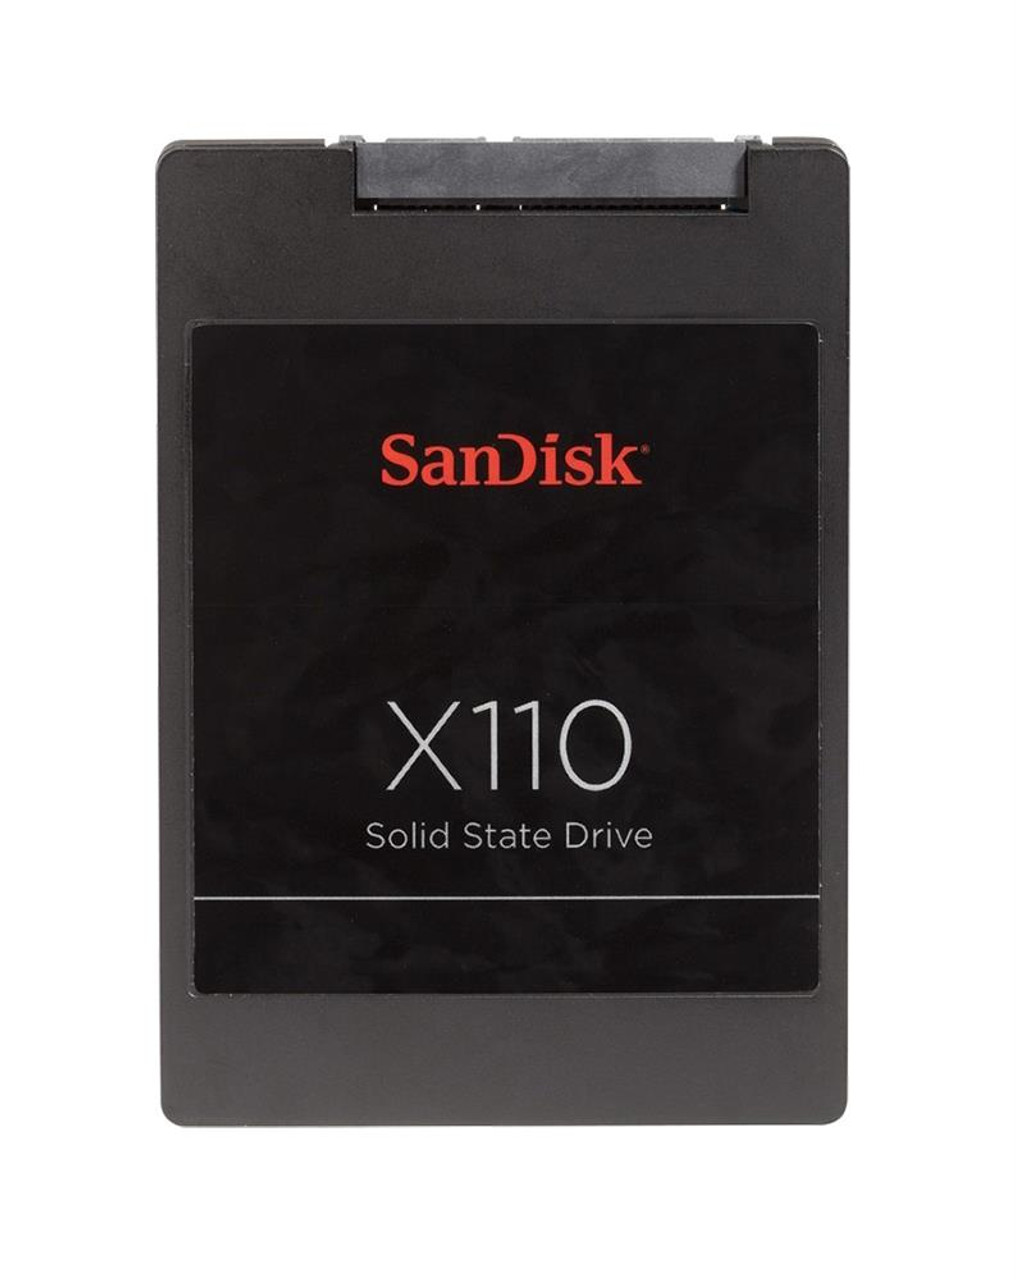 SD6SB1M-032G SanDisk X110 32GB MLC SATA 6Gbps 2.5-inch Internal Solid State Drive (SSD)